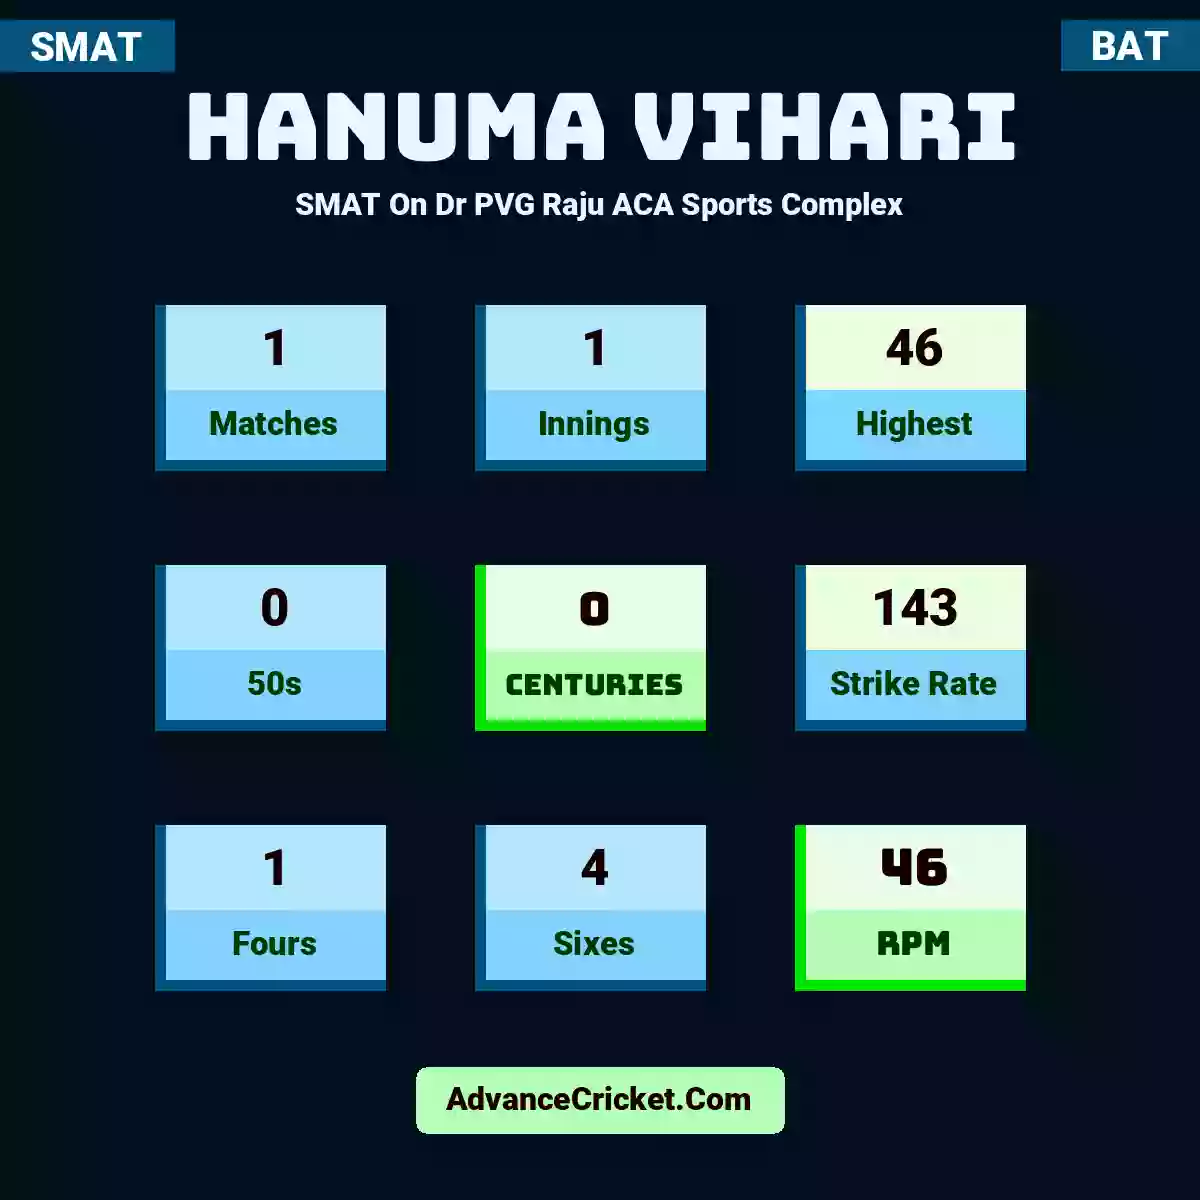 Hanuma Vihari SMAT  On Dr PVG Raju ACA Sports Complex, Hanuma Vihari played 1 matches, scored 46 runs as highest, 0 half-centuries, and 0 centuries, with a strike rate of 143. H.Vihari hit 1 fours and 4 sixes, with an RPM of 46.